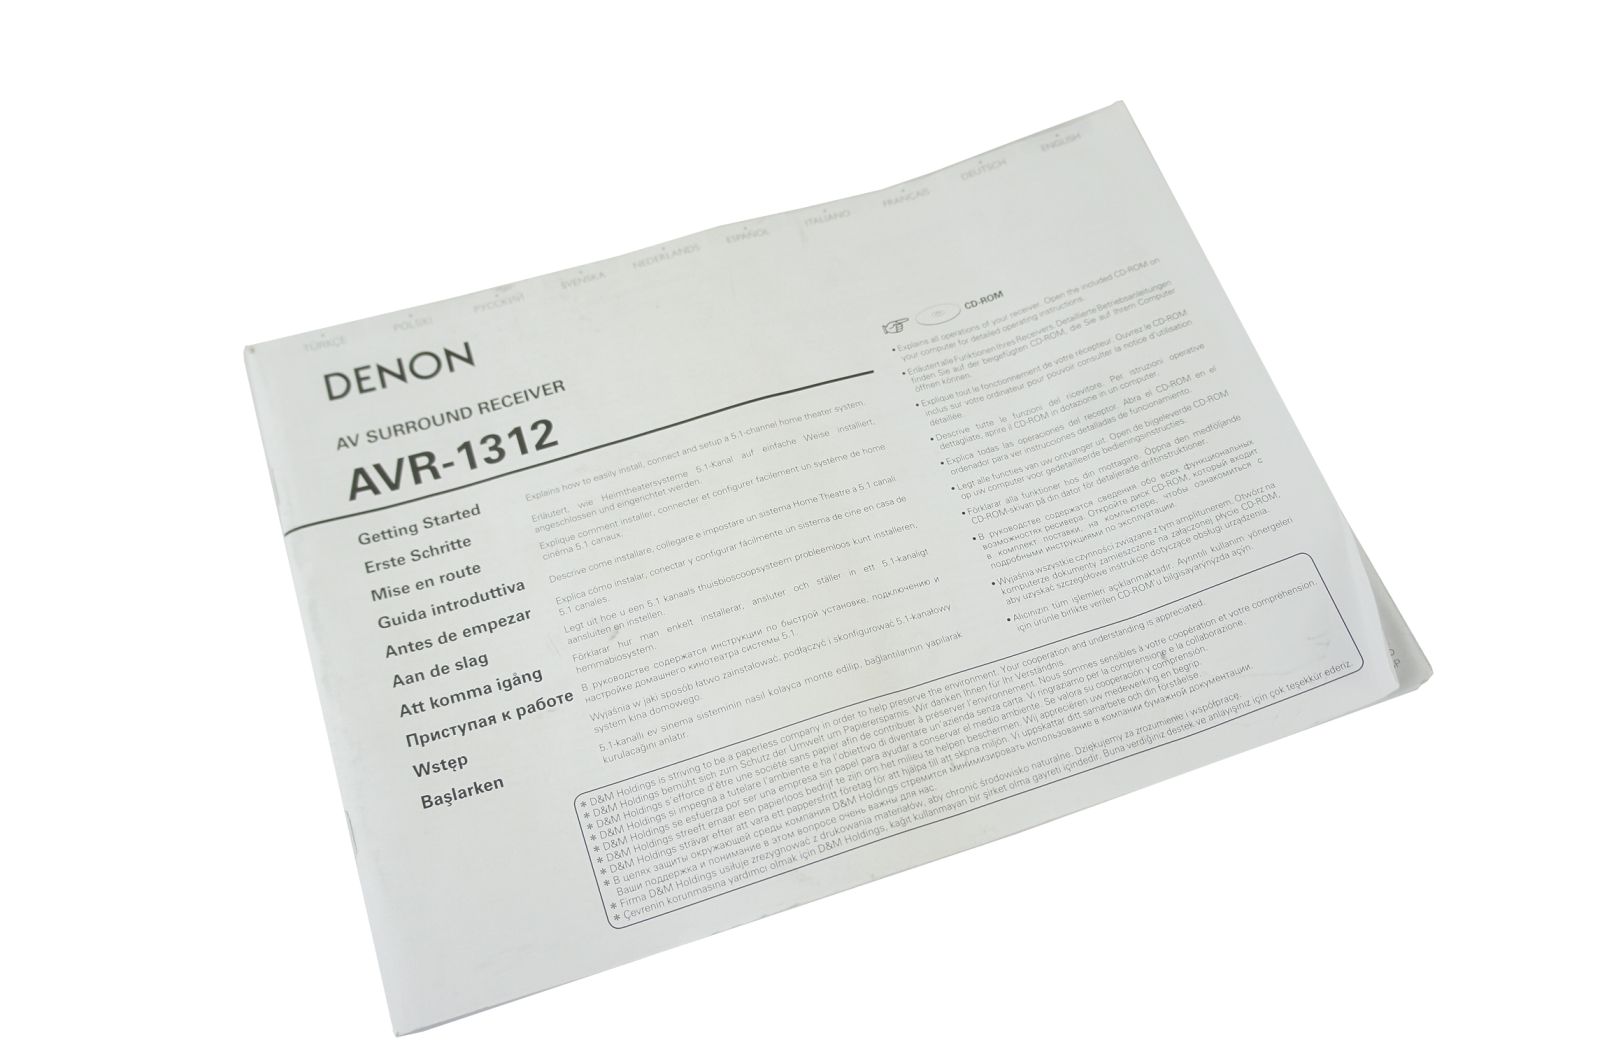 Denon_AVR-1312_HDMI_5.1_AV-Receiver_13